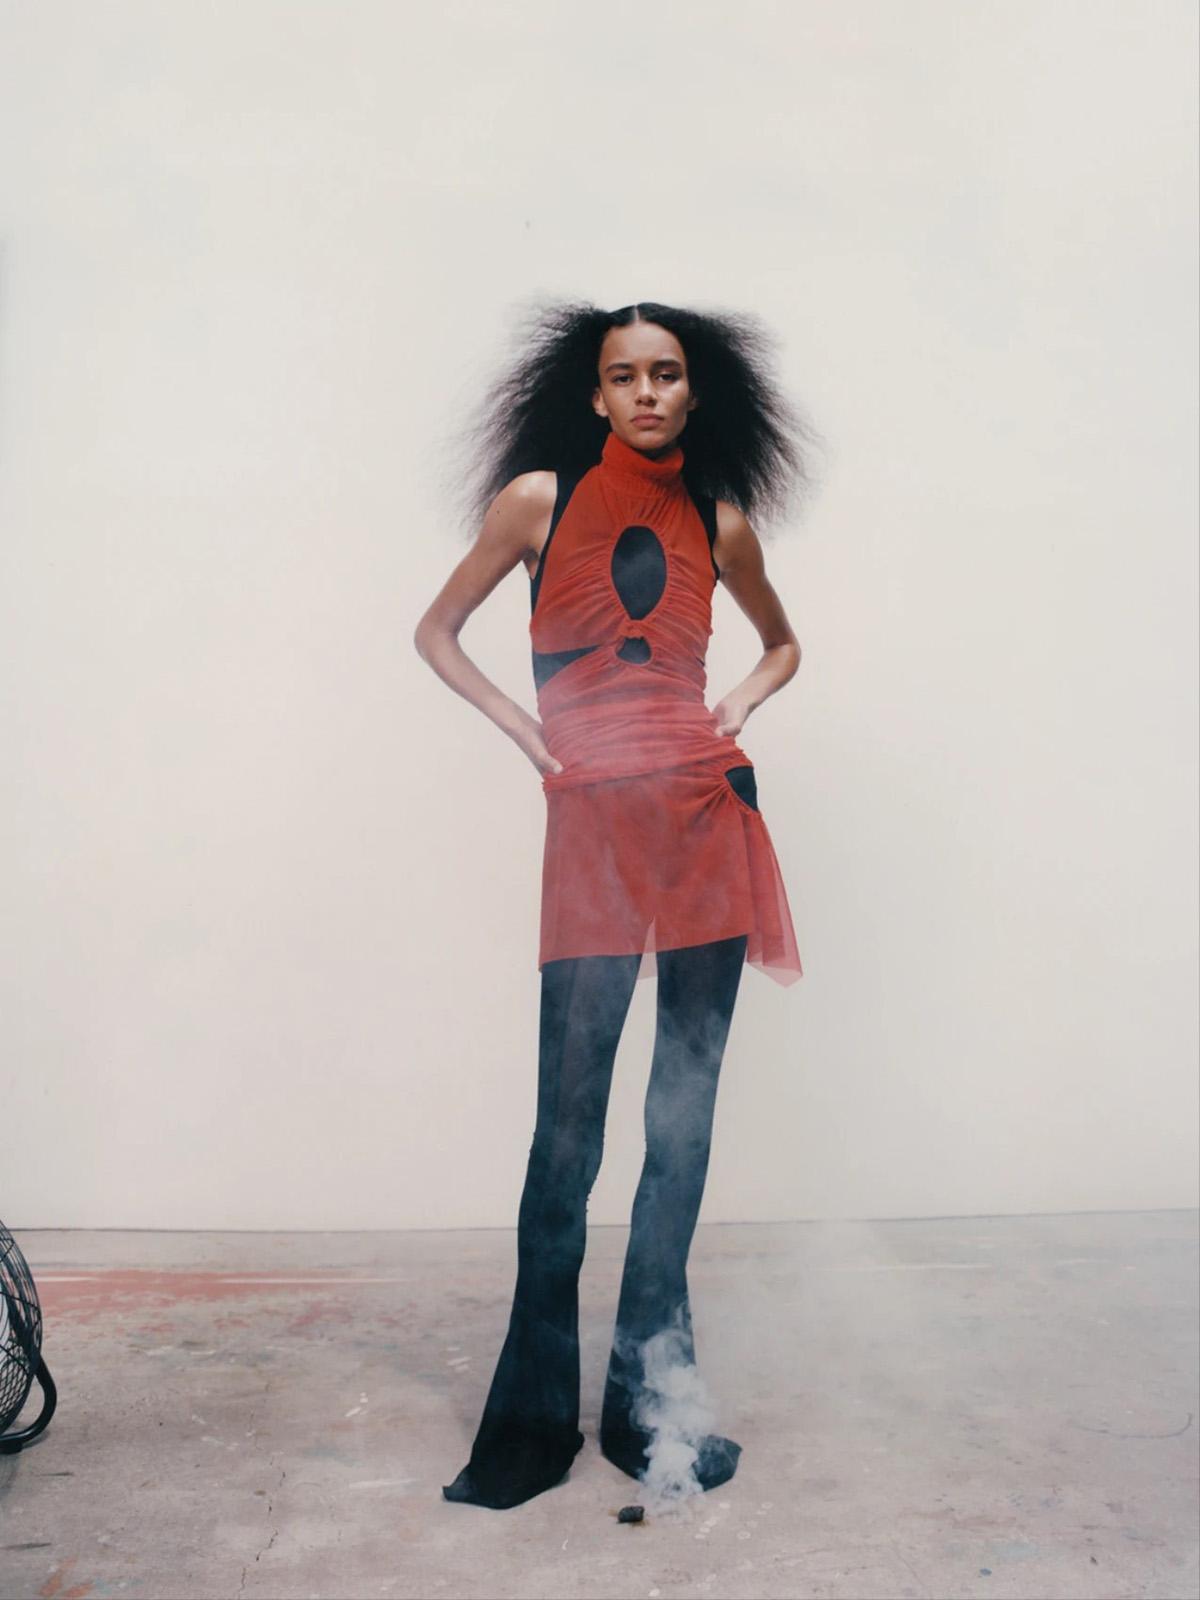 Clothing: Supriya Lele. Binx Walton by Stef Mitchell for i-D Magazine Summer 2021